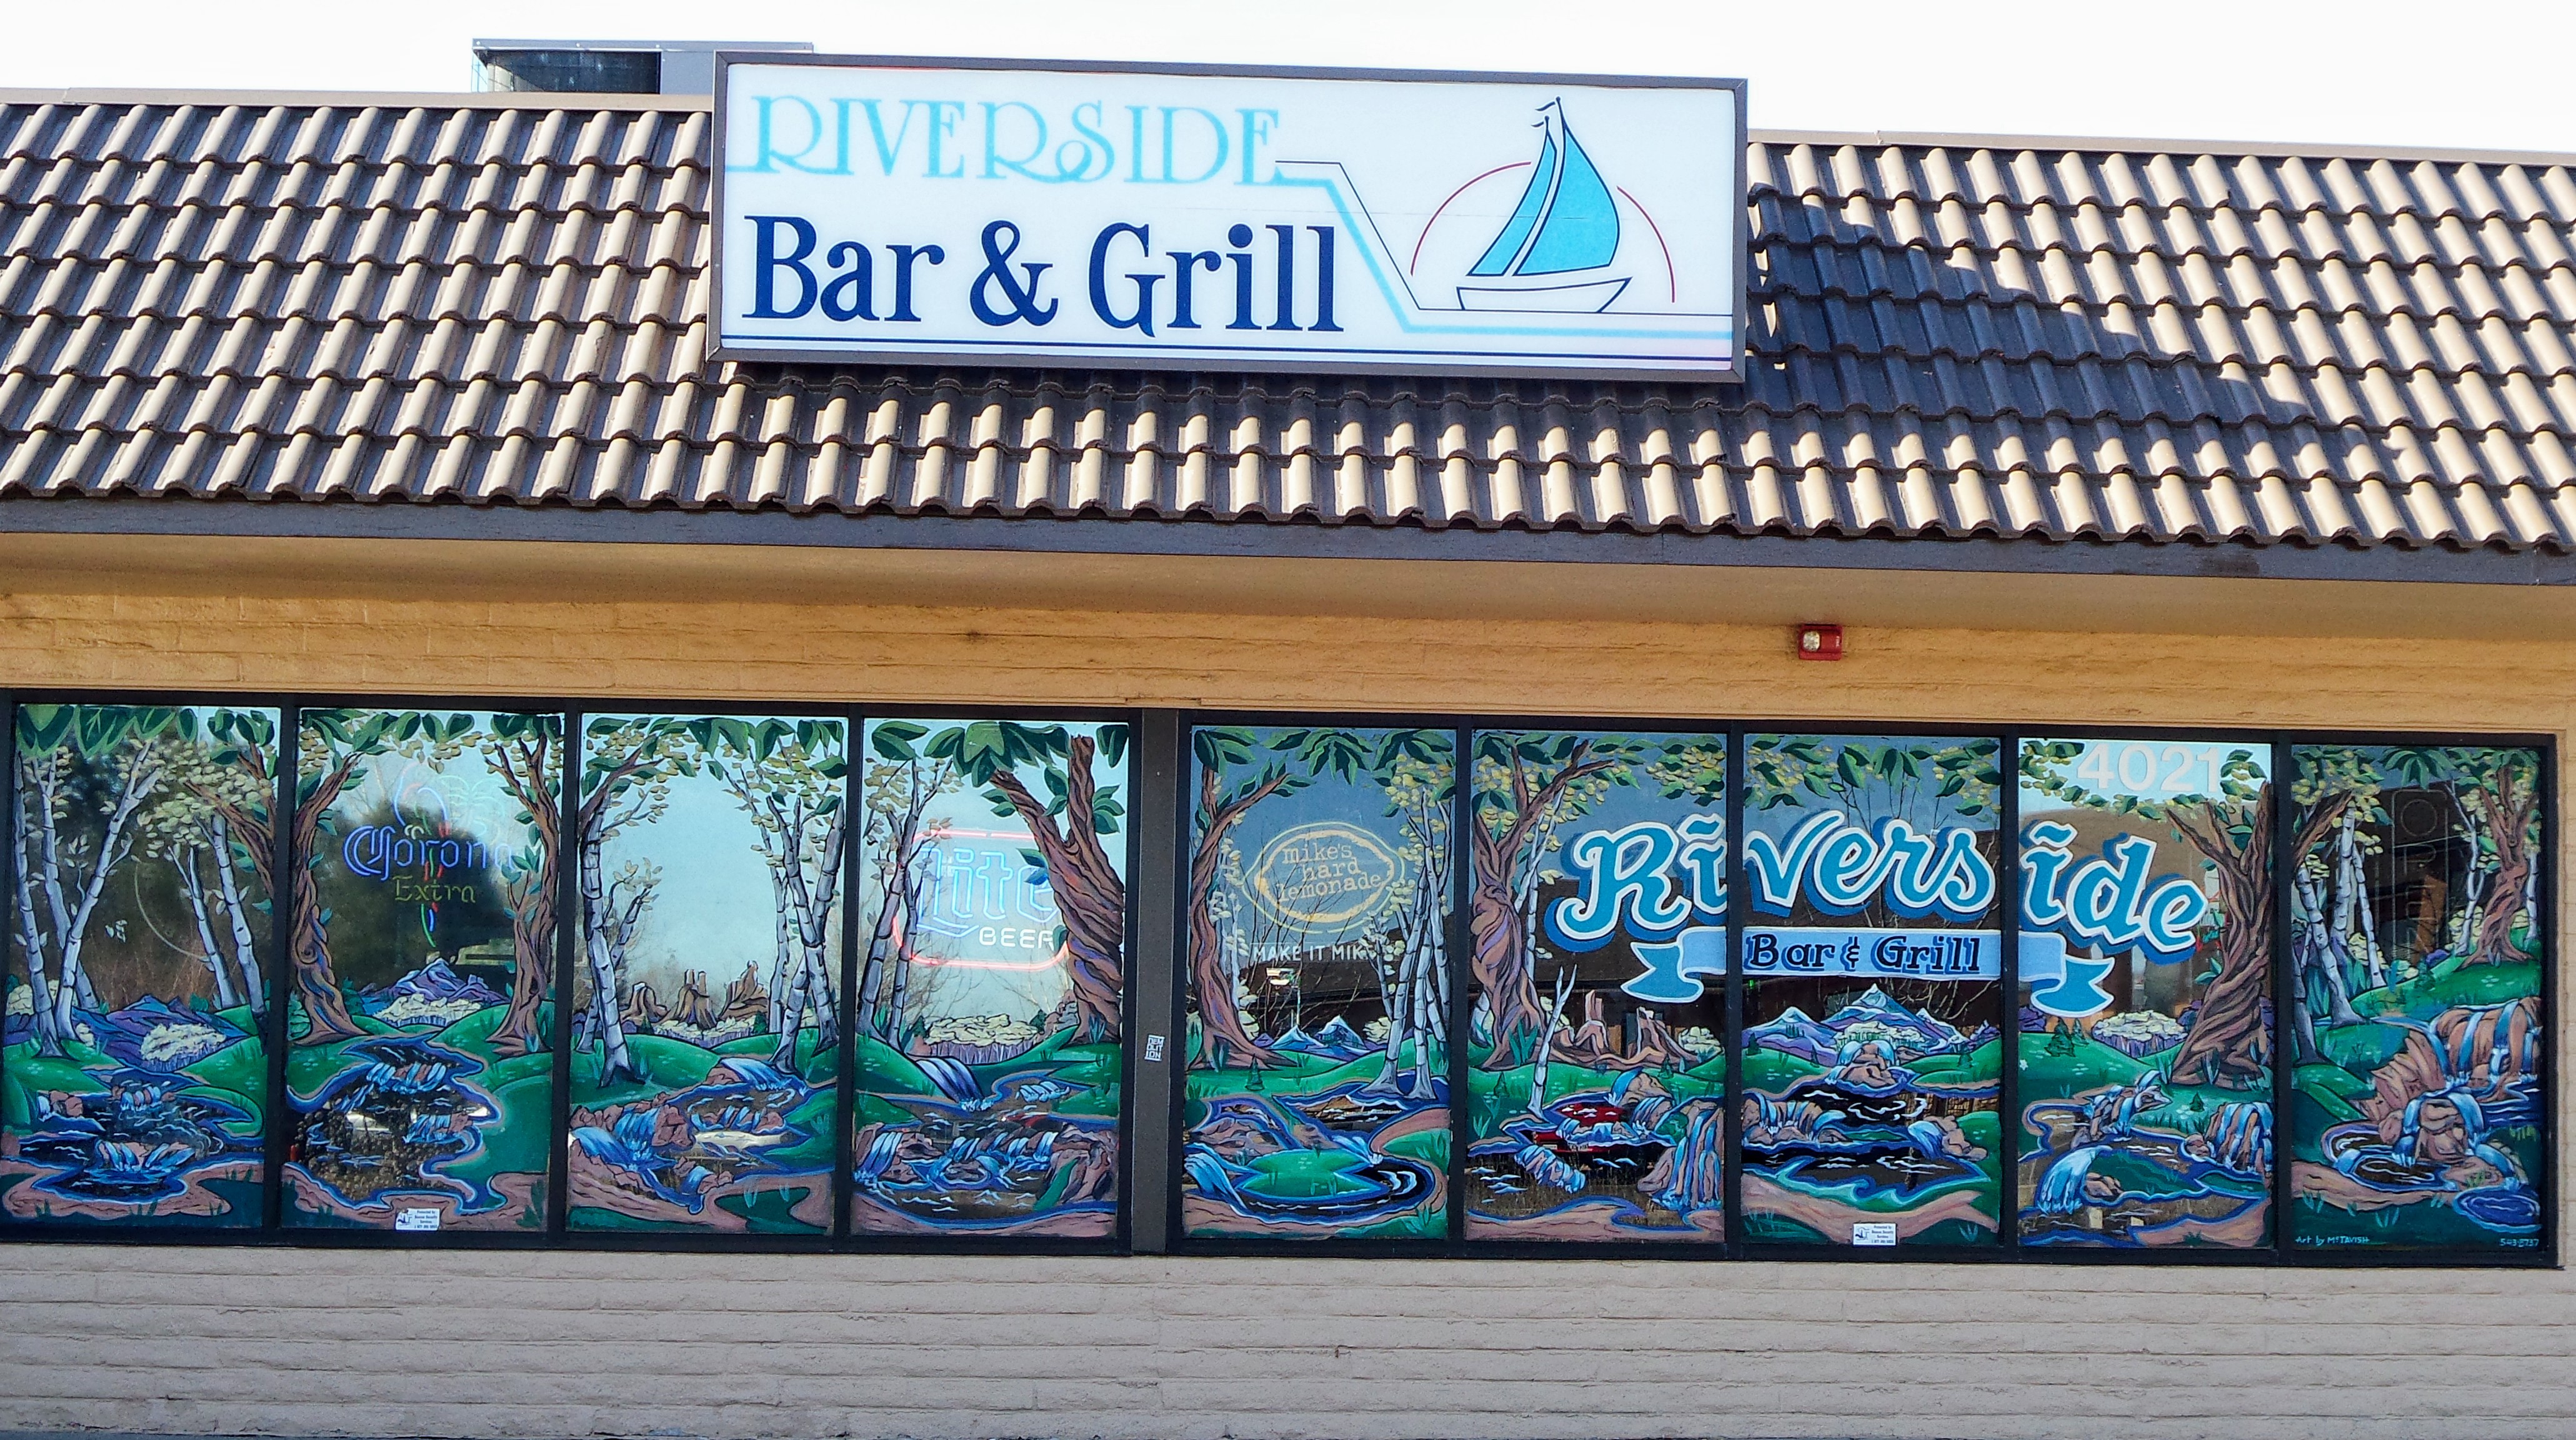 Riverside Bar & Grill Menu